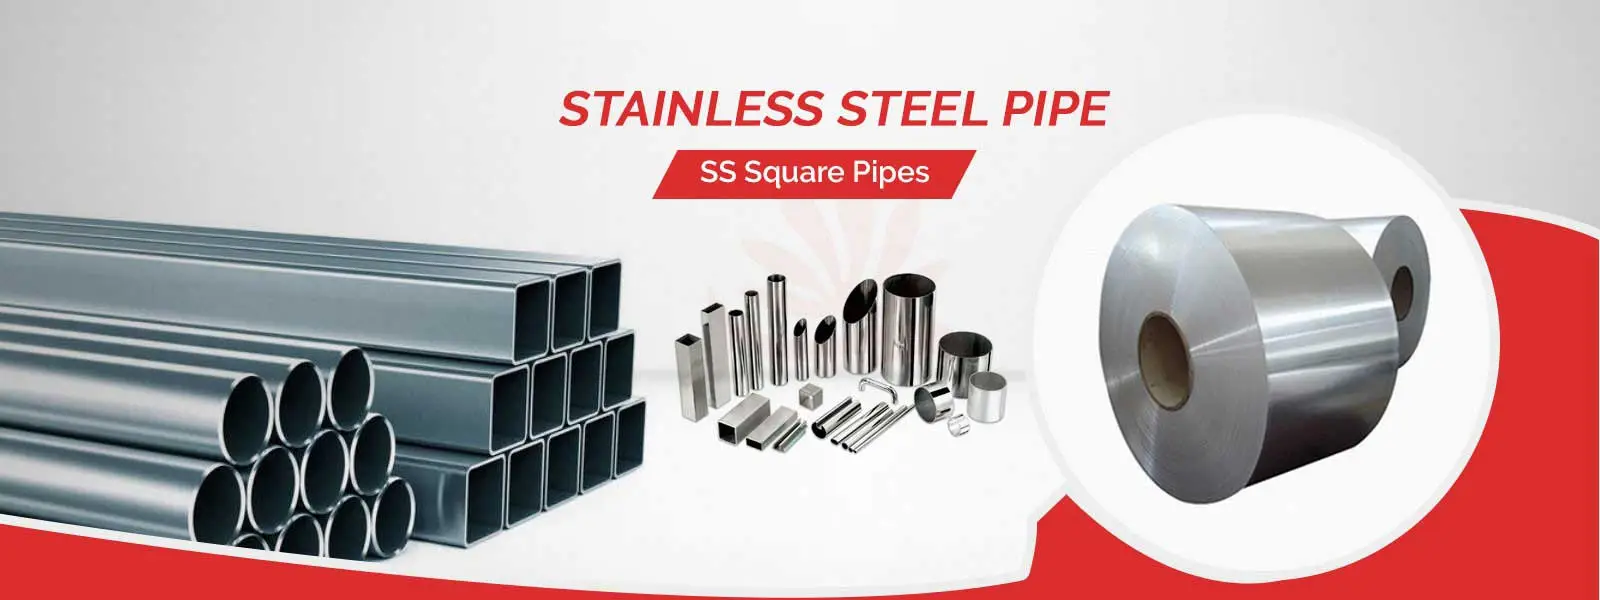 Stainless Steel Pipe Manufacturers in Jamnagar